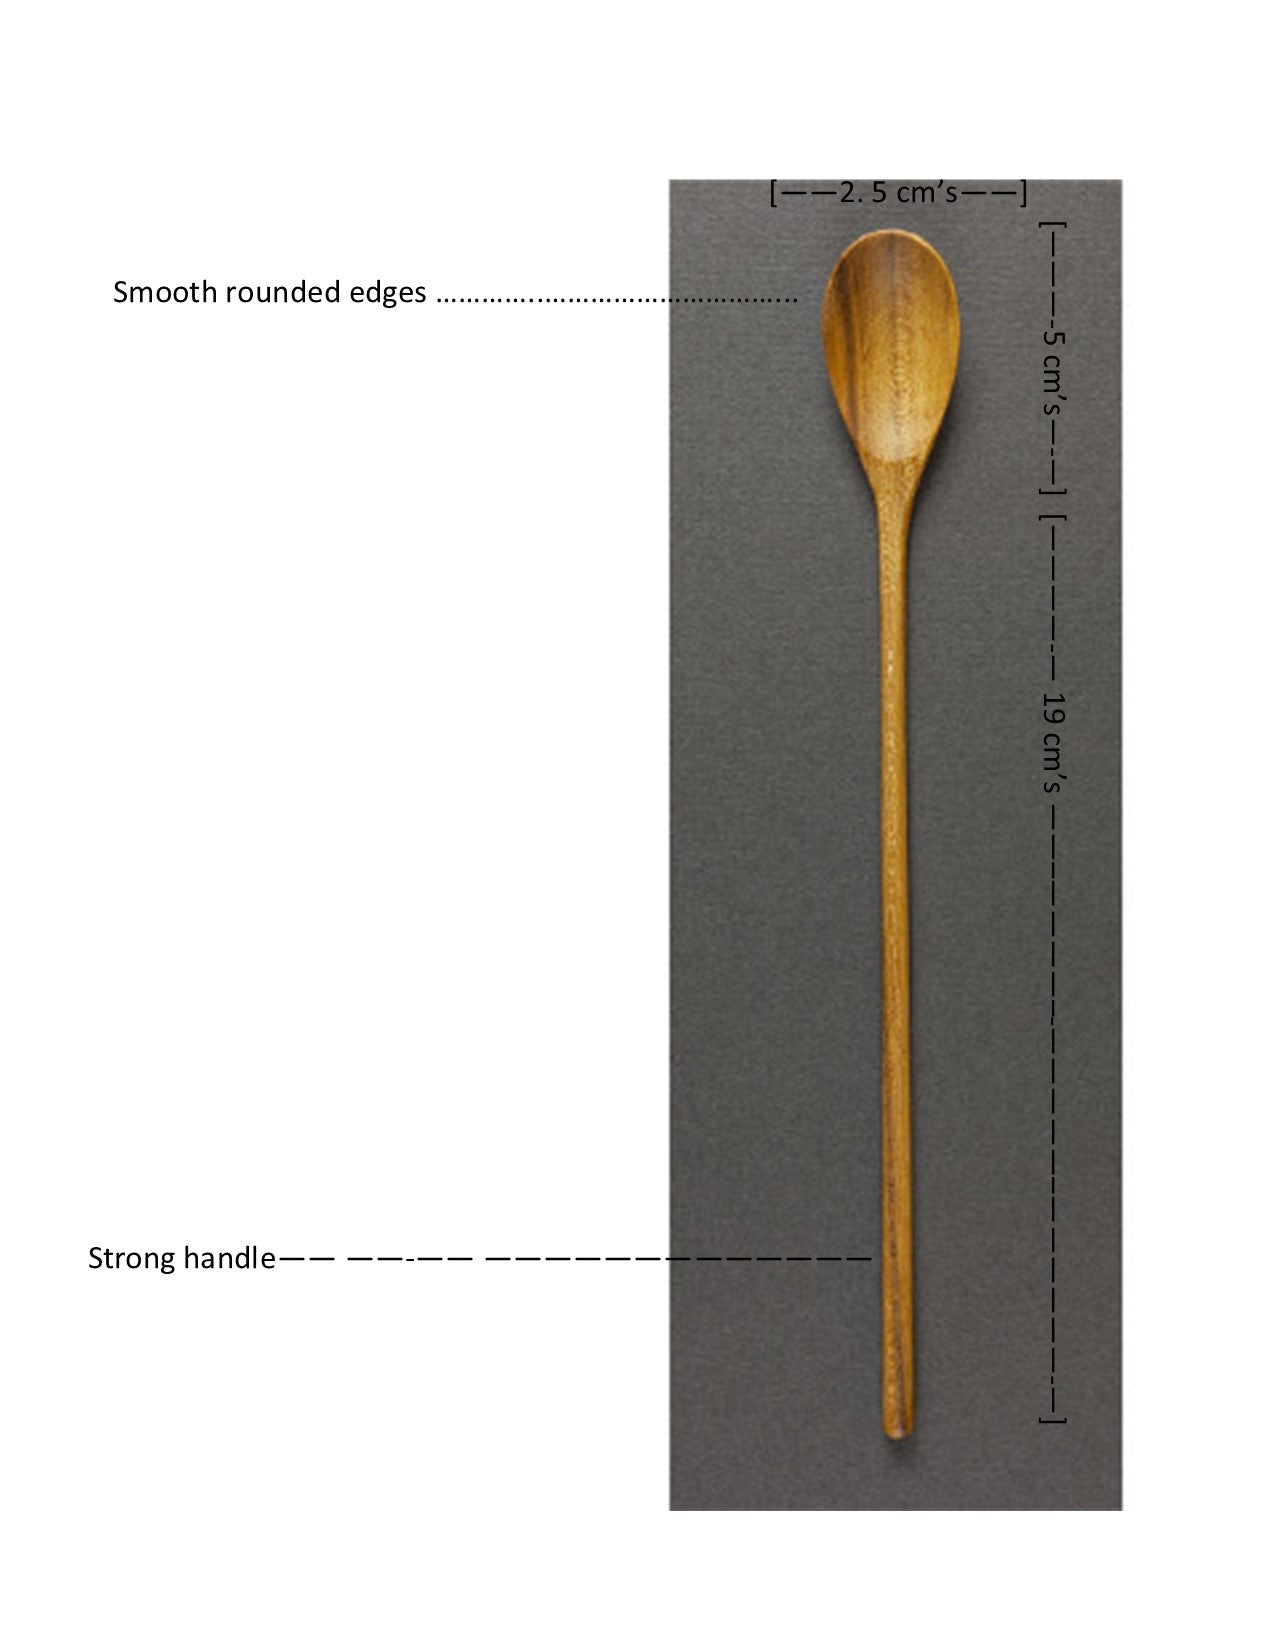 handmade long handle wooden parfait spoon with measurements